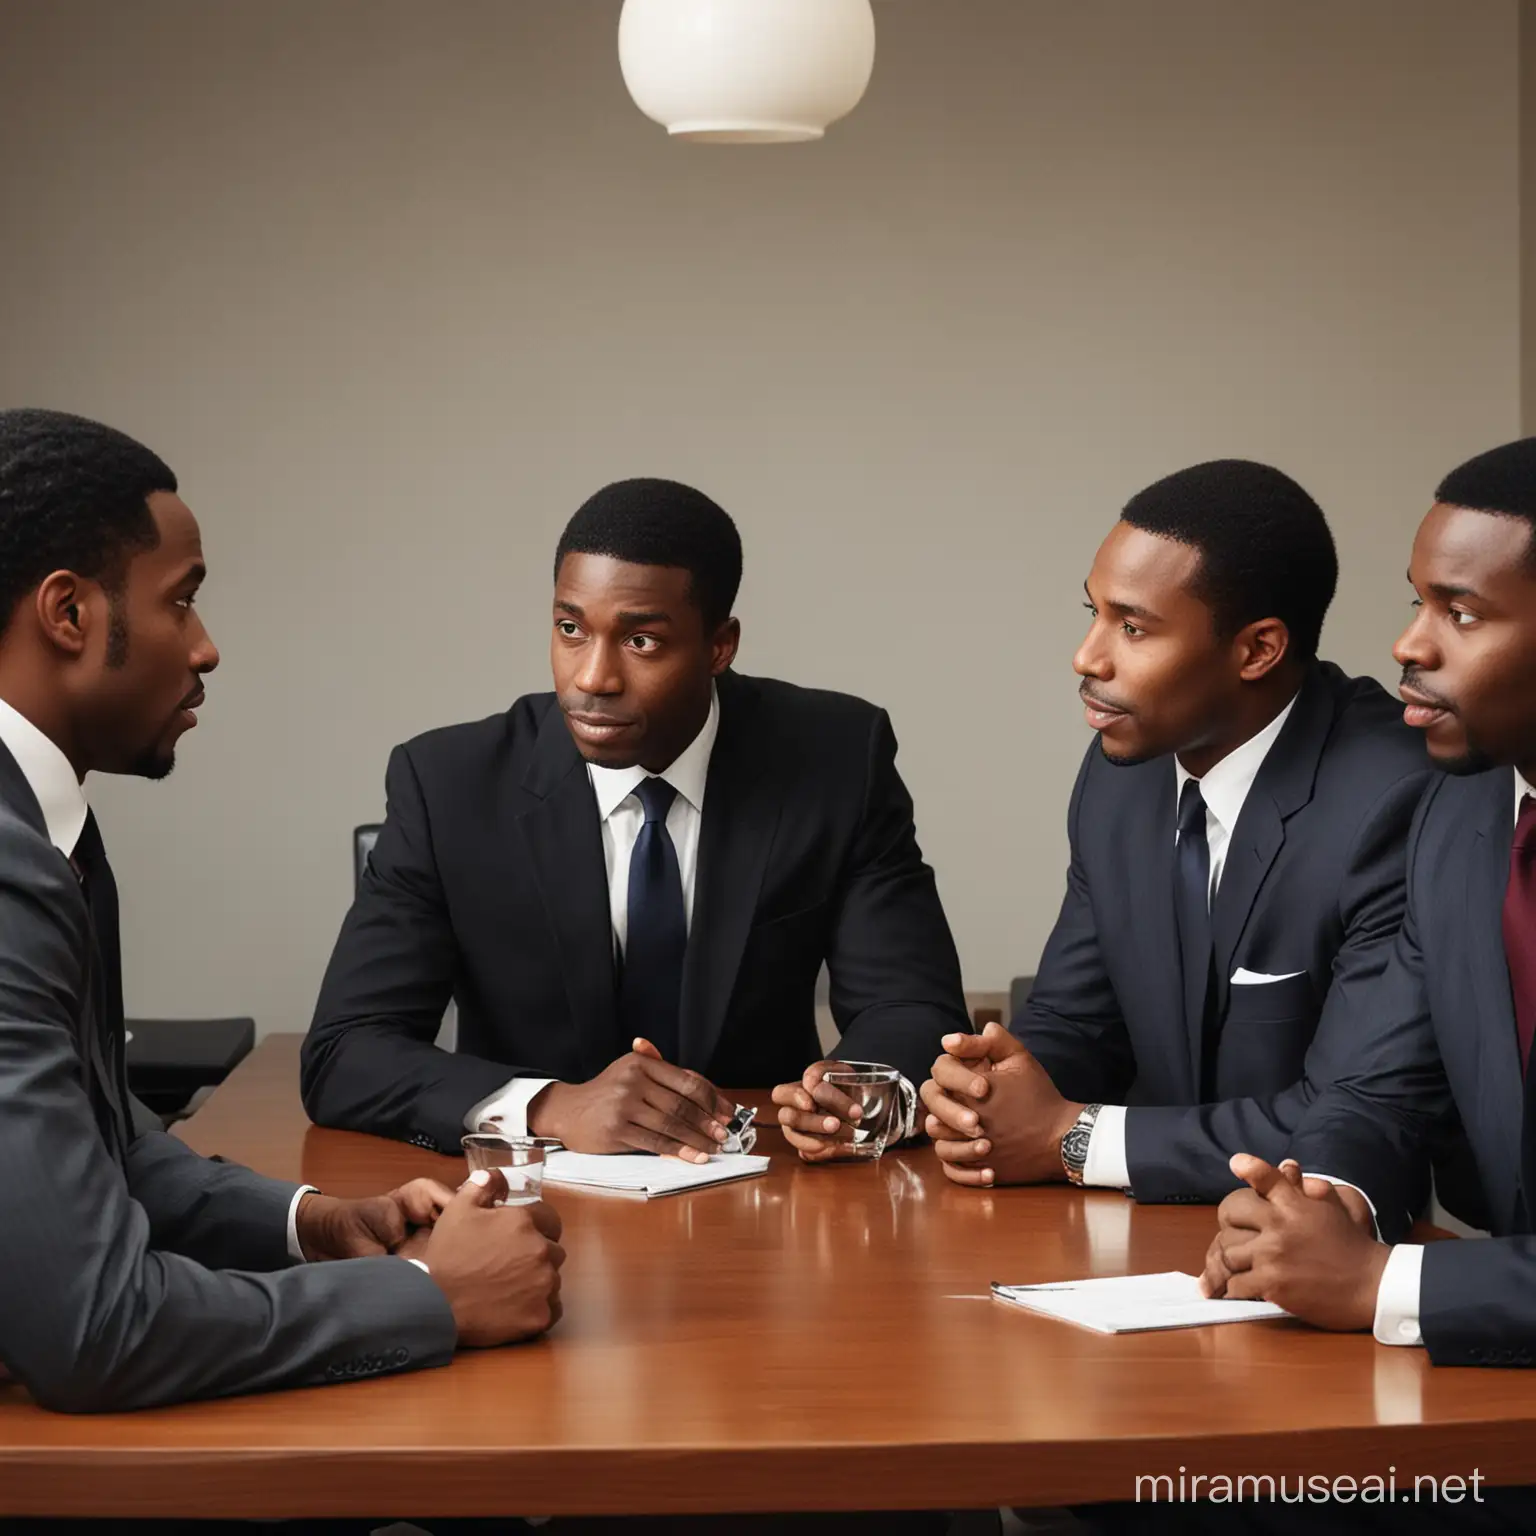 Professional Black Men in Business Meeting